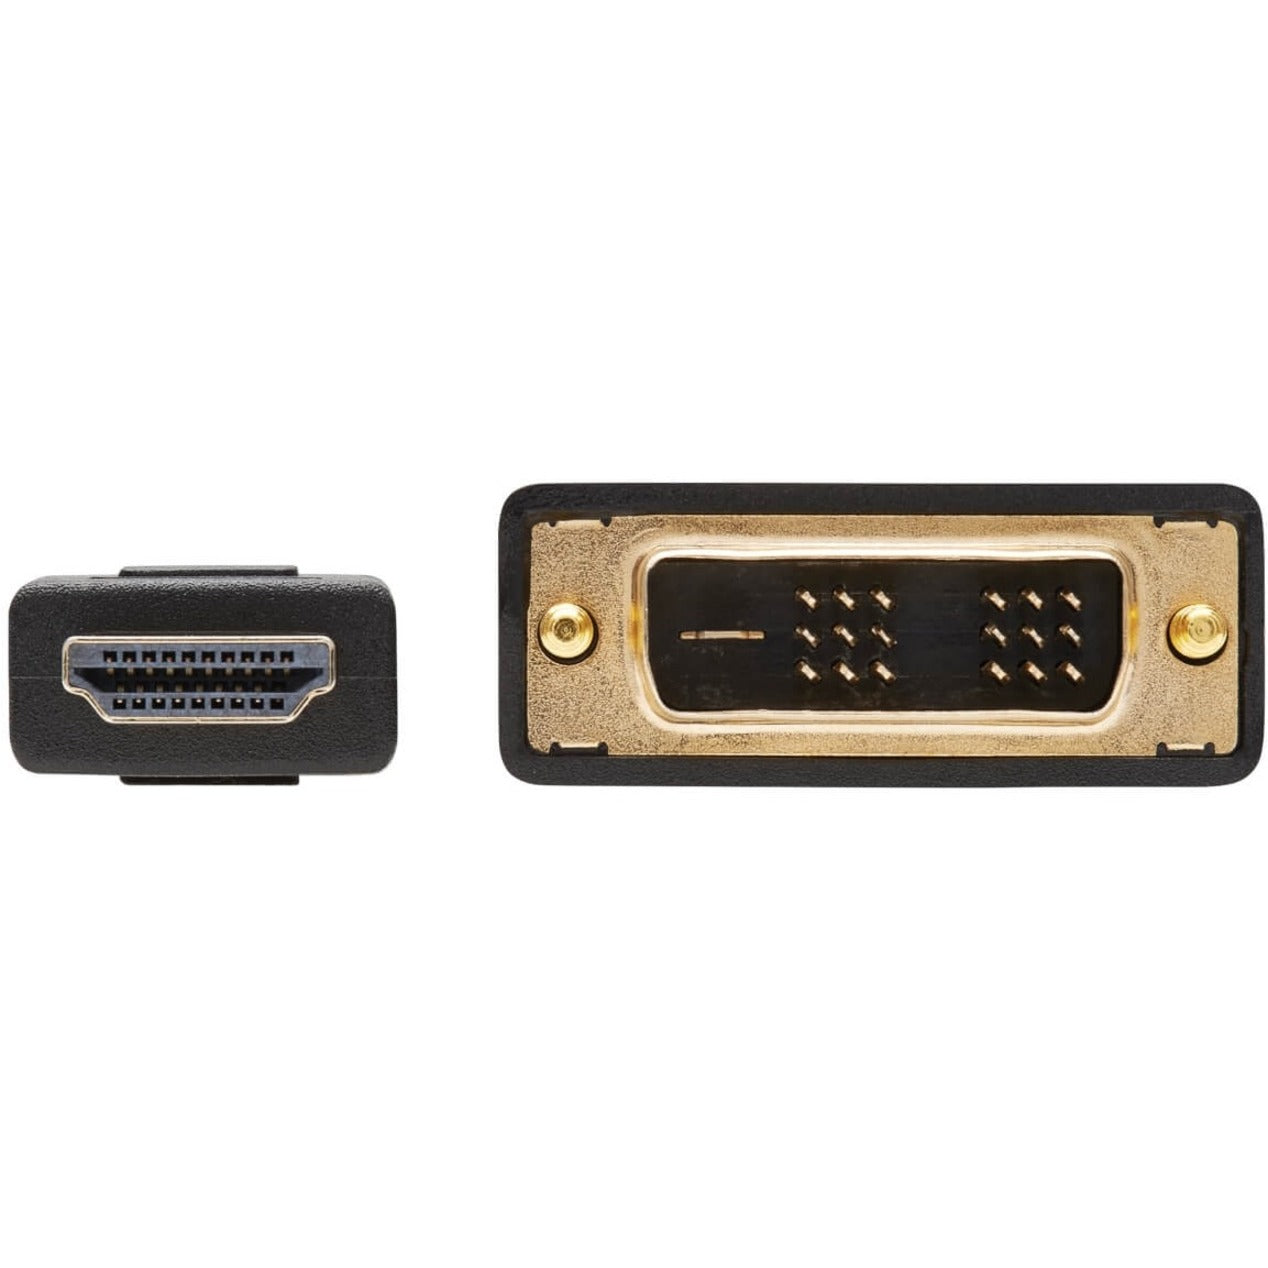 Tripp Lite: トリップライト P566-010 Gold Digital Video Cable: P566-010 ゴールドデジタルビデオケーブル 10 ft HDMI to DVI Male: 10 フィート HDMI から DVI メス Copper Conductor: 銅導体